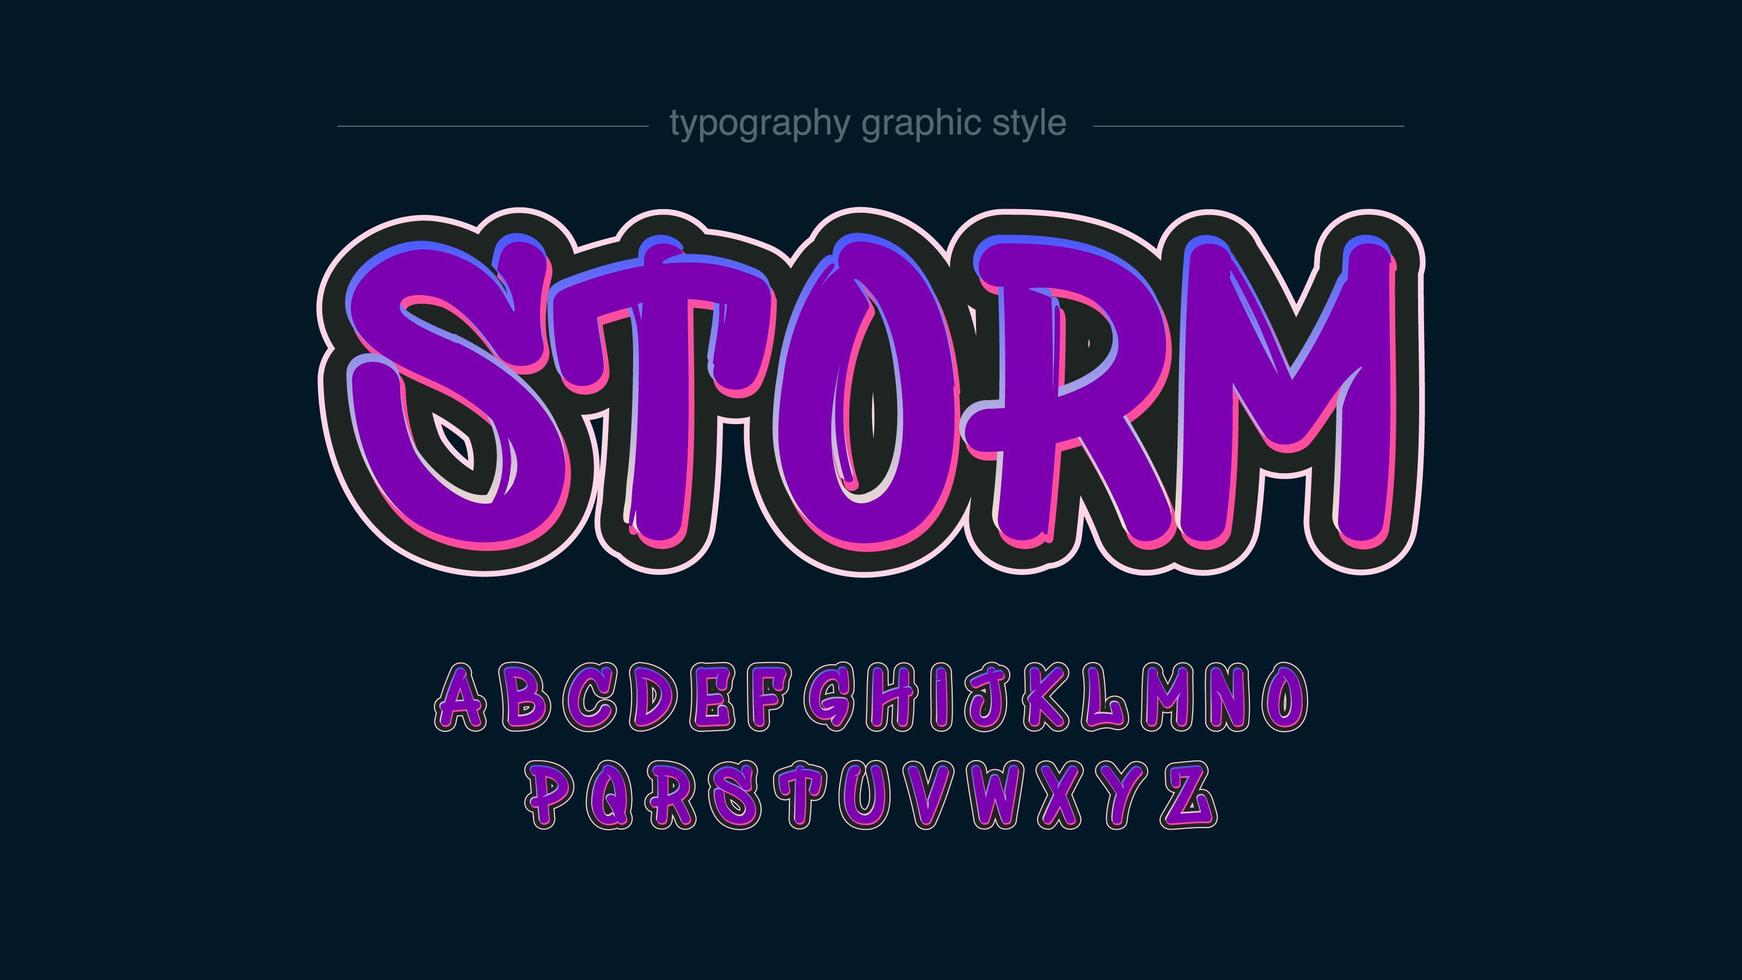 Purple Neon Graffiti Typography Style vector